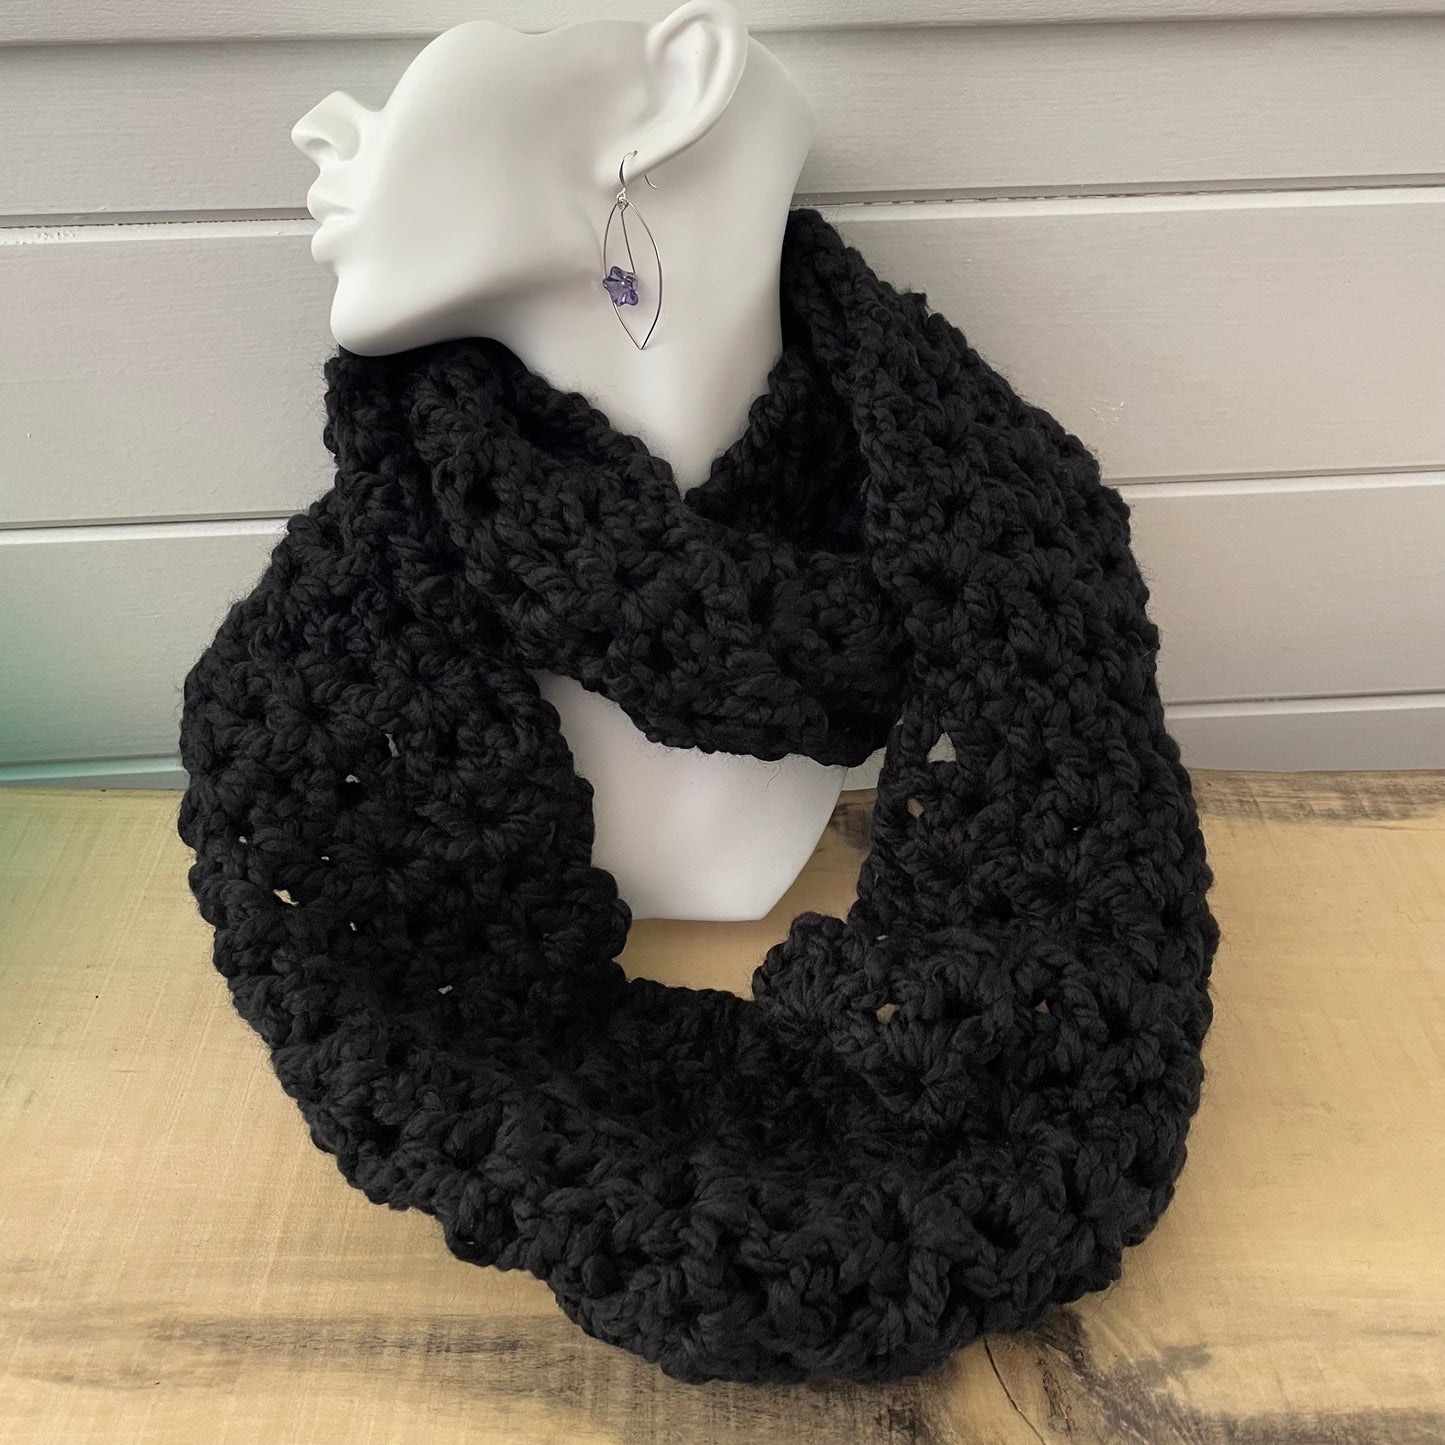 Extra Warm Black Infinity Scarf Wool Blend Crochet Knit Minimalist Unisex Hand Crafted Retro Vintage Style Media